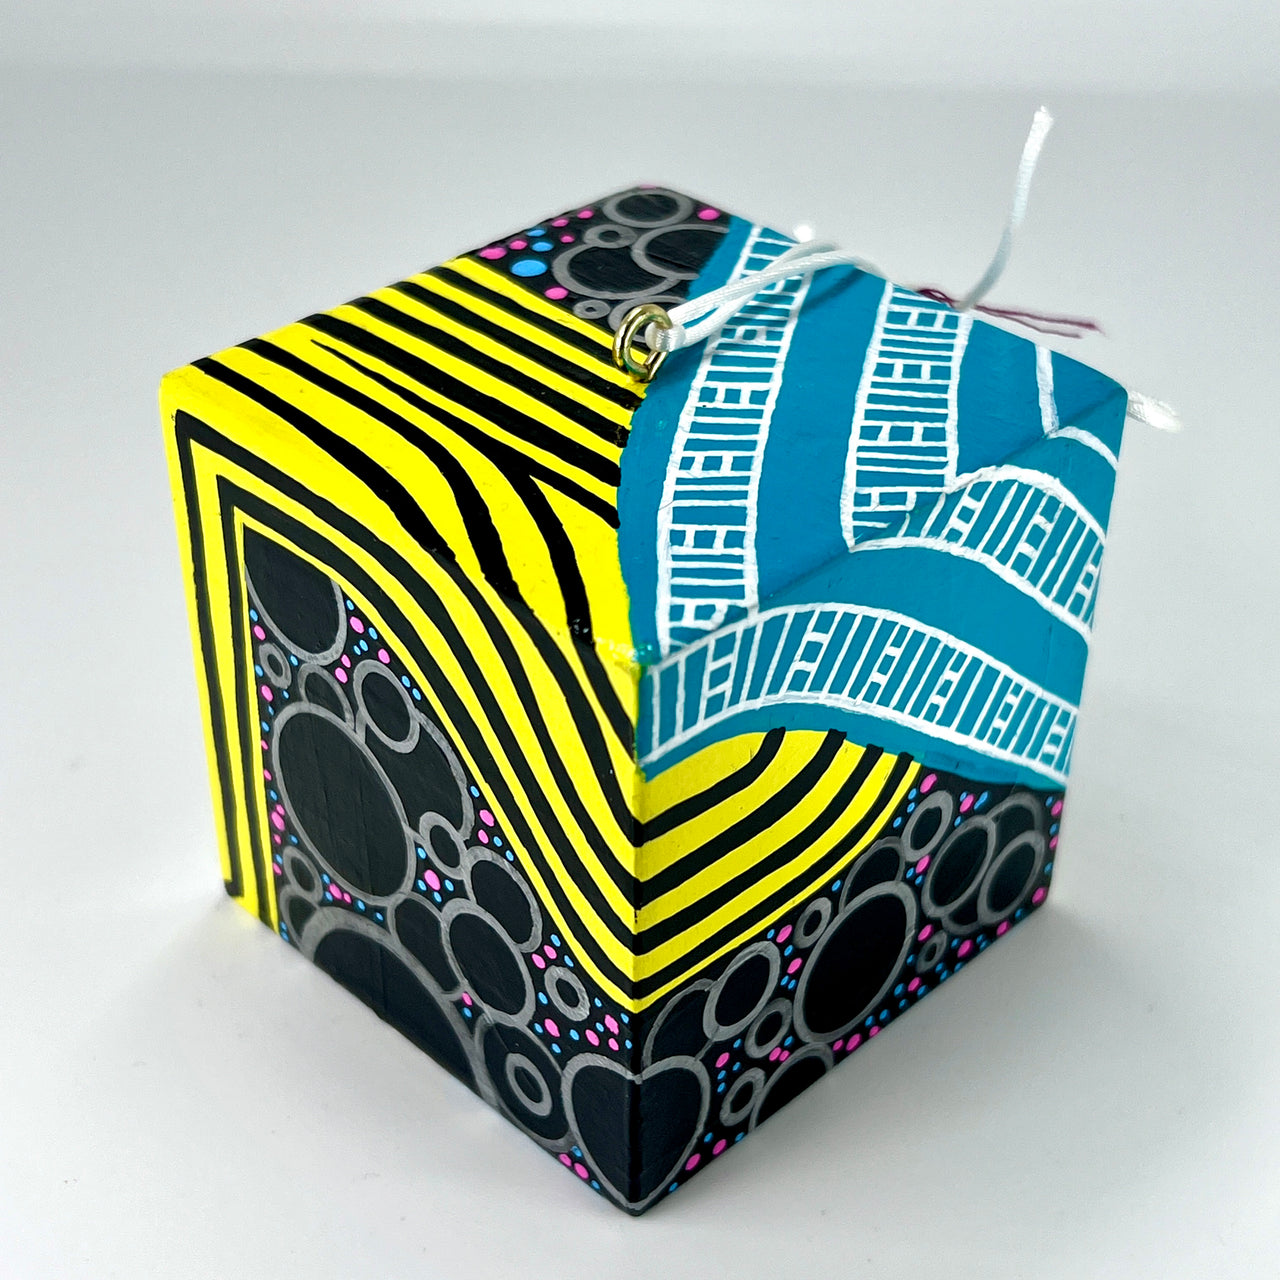 #16 - 3D Cube Art - 2.25" cube